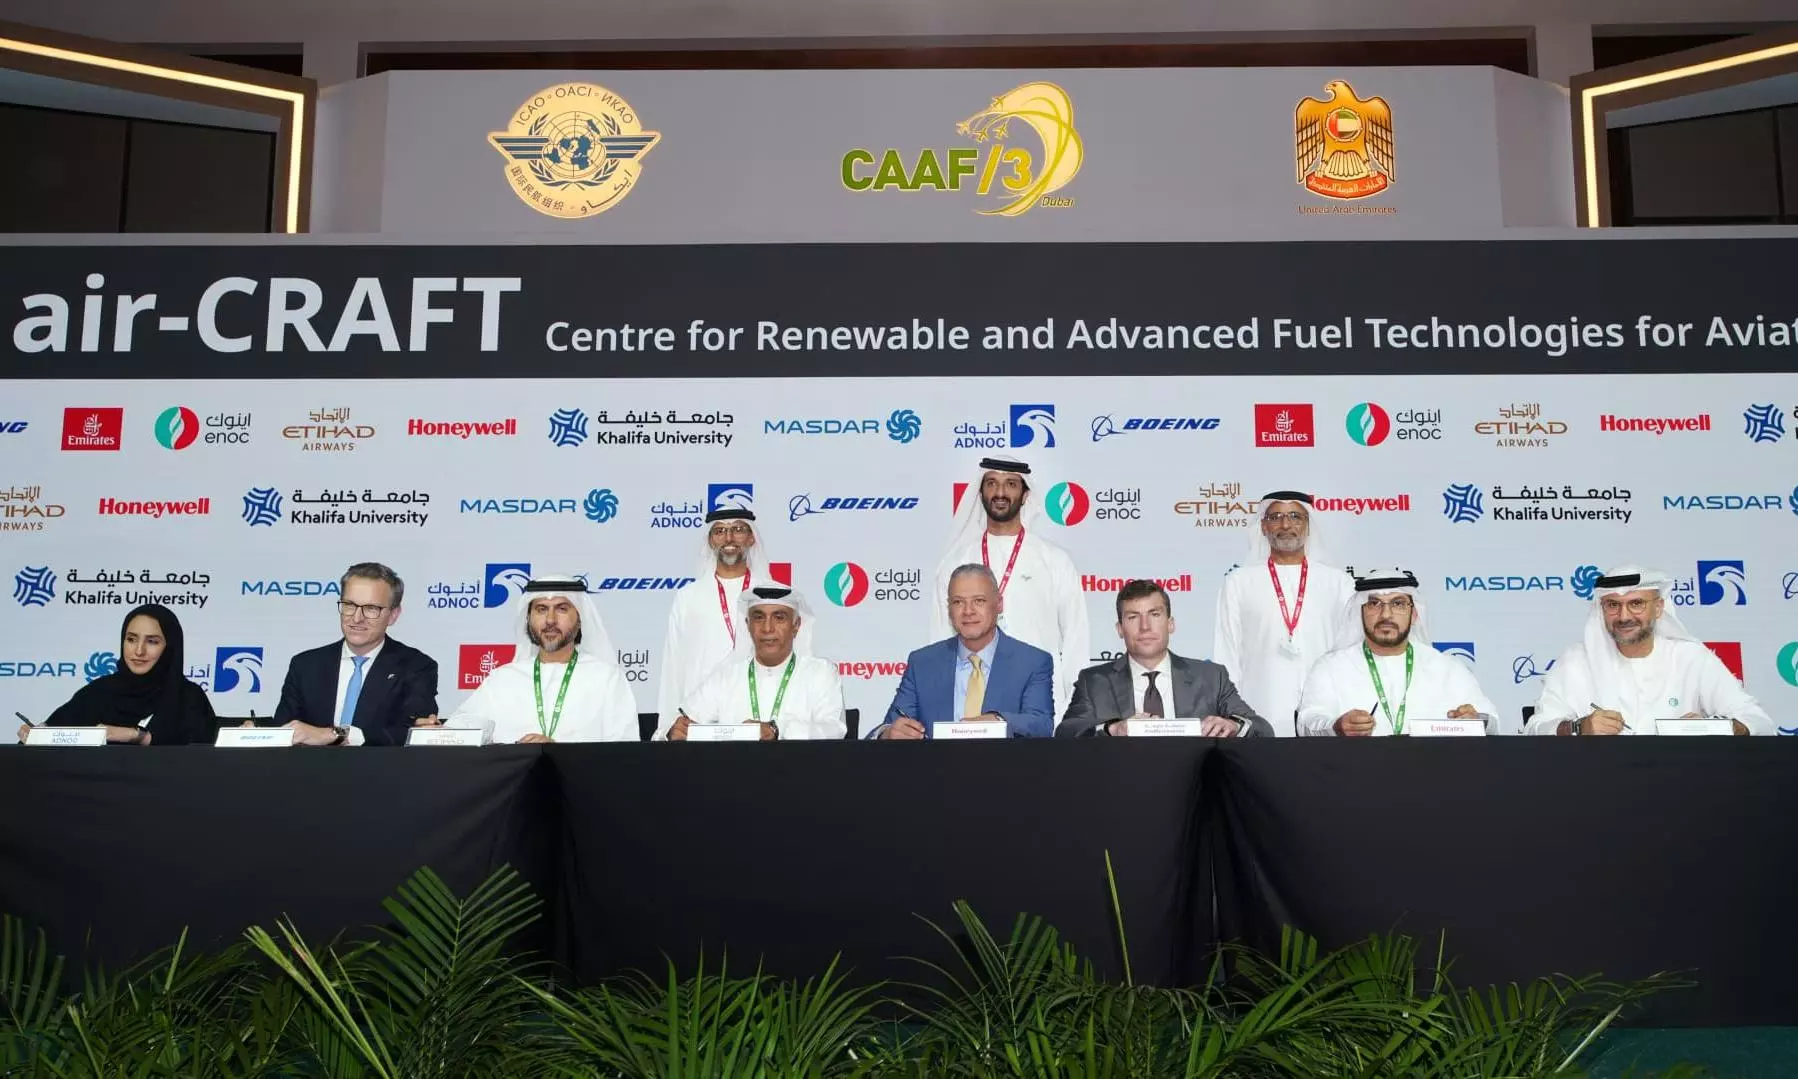 Emirates joins UAE-based consortium for renewable aviation fuels